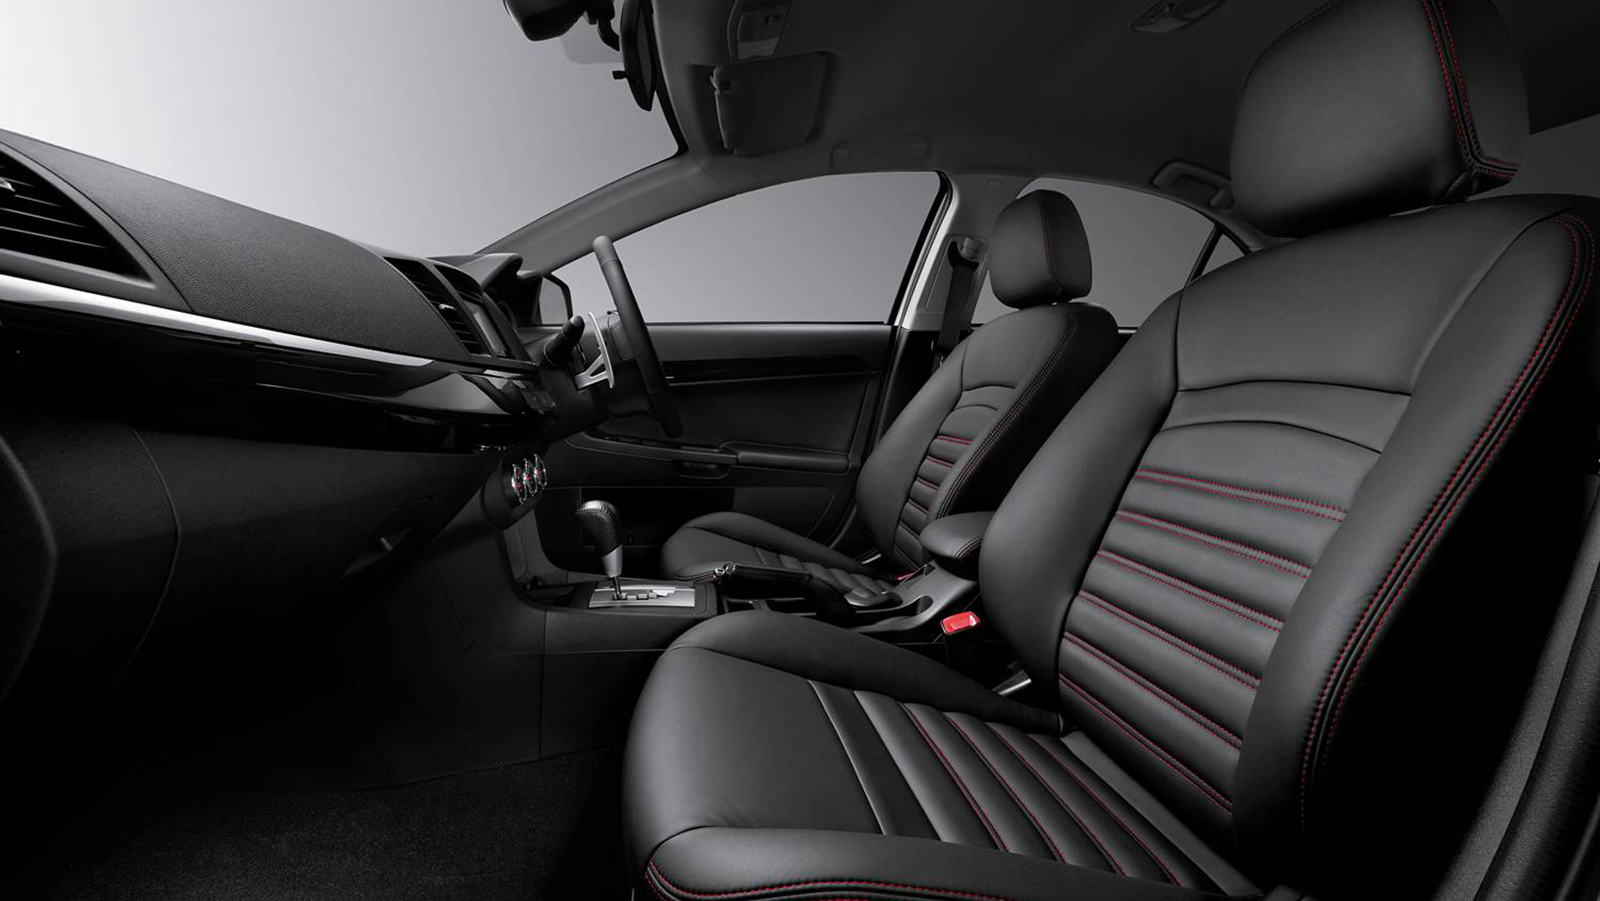 2016 Mitsubishi Lancer 2.0 GTE Interior 001